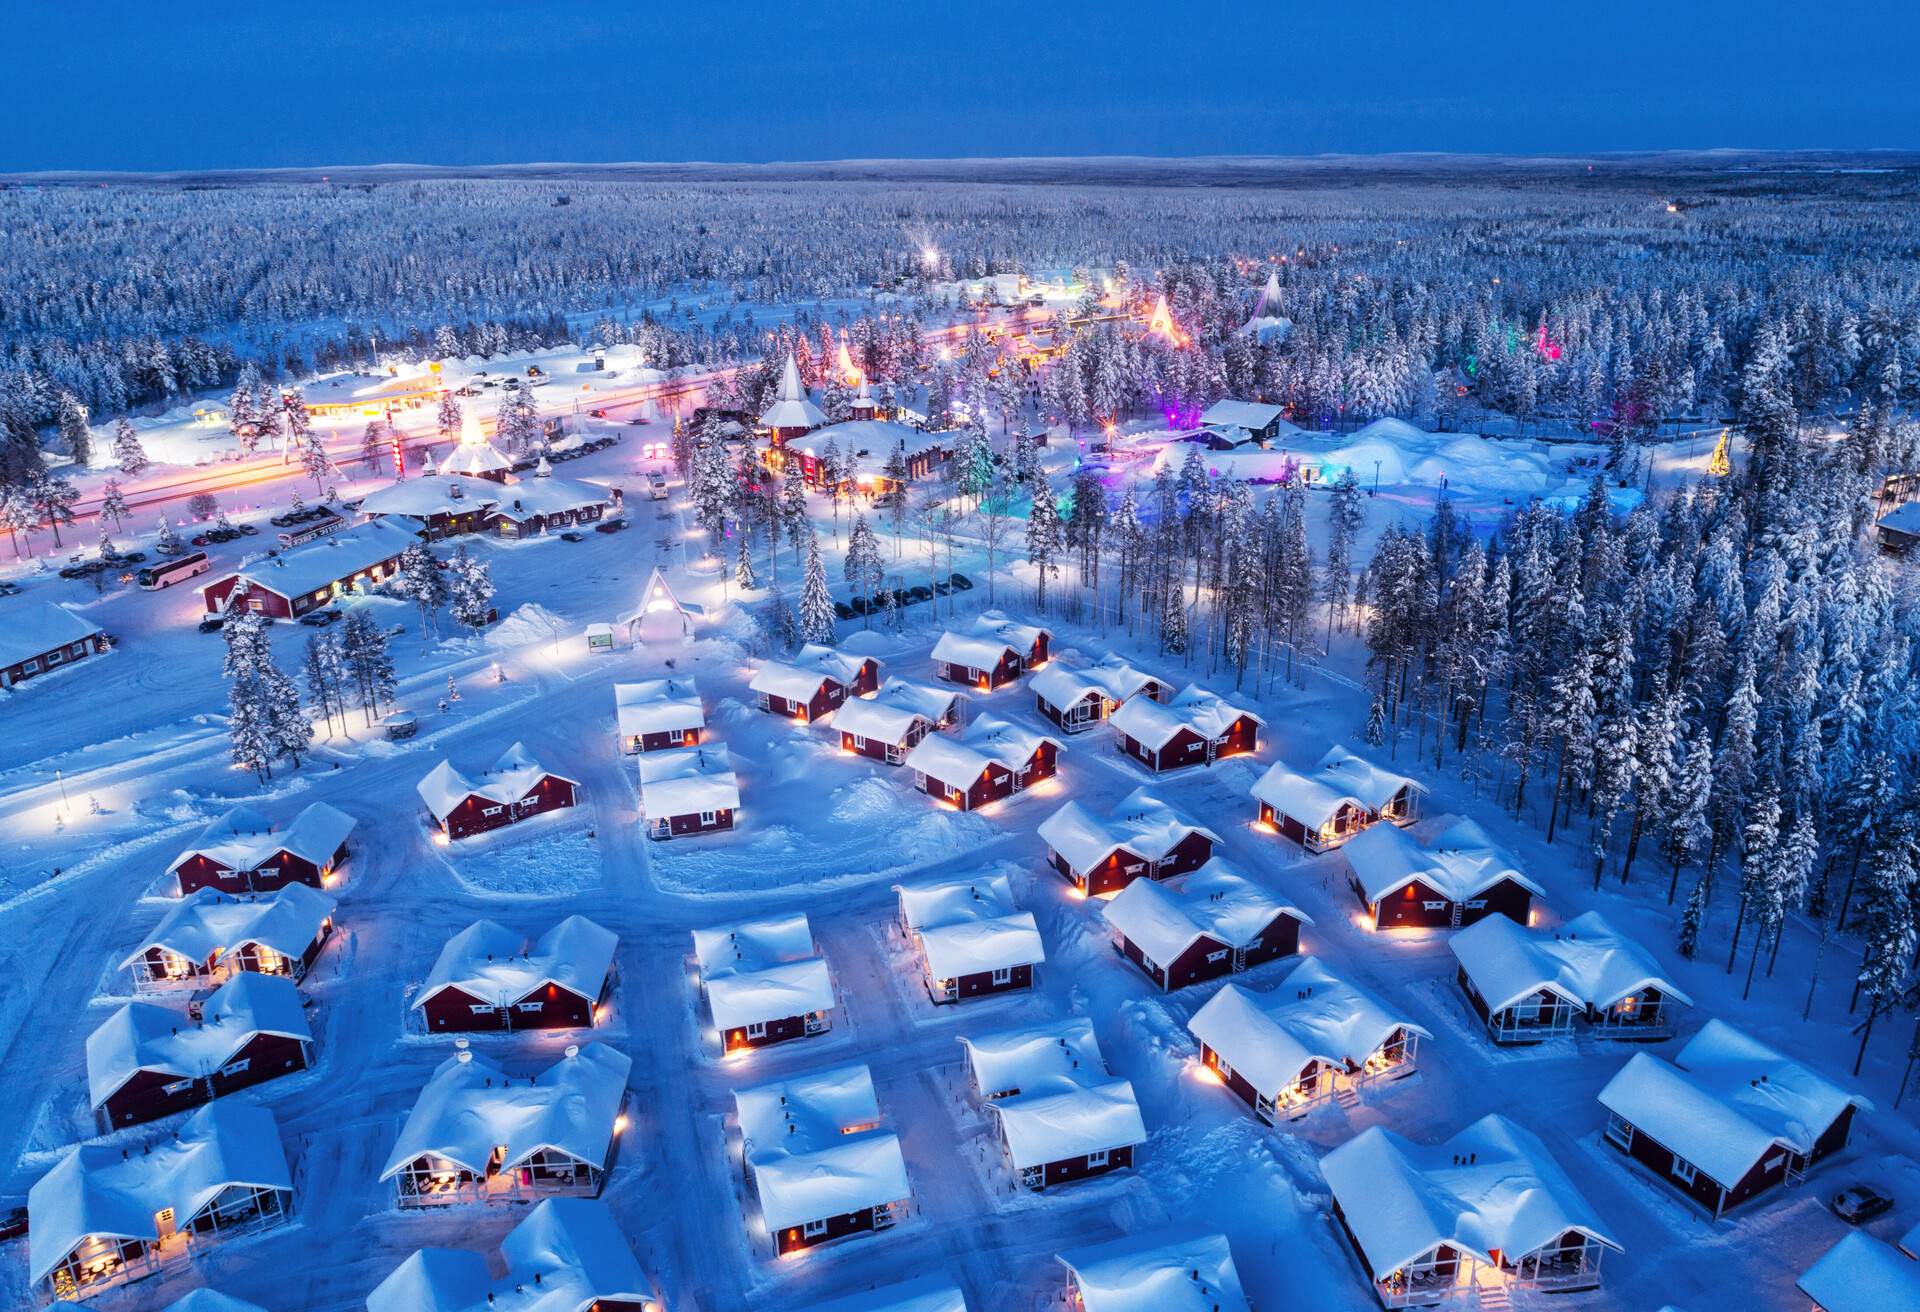 A quaint arctic village surrounded by trees.